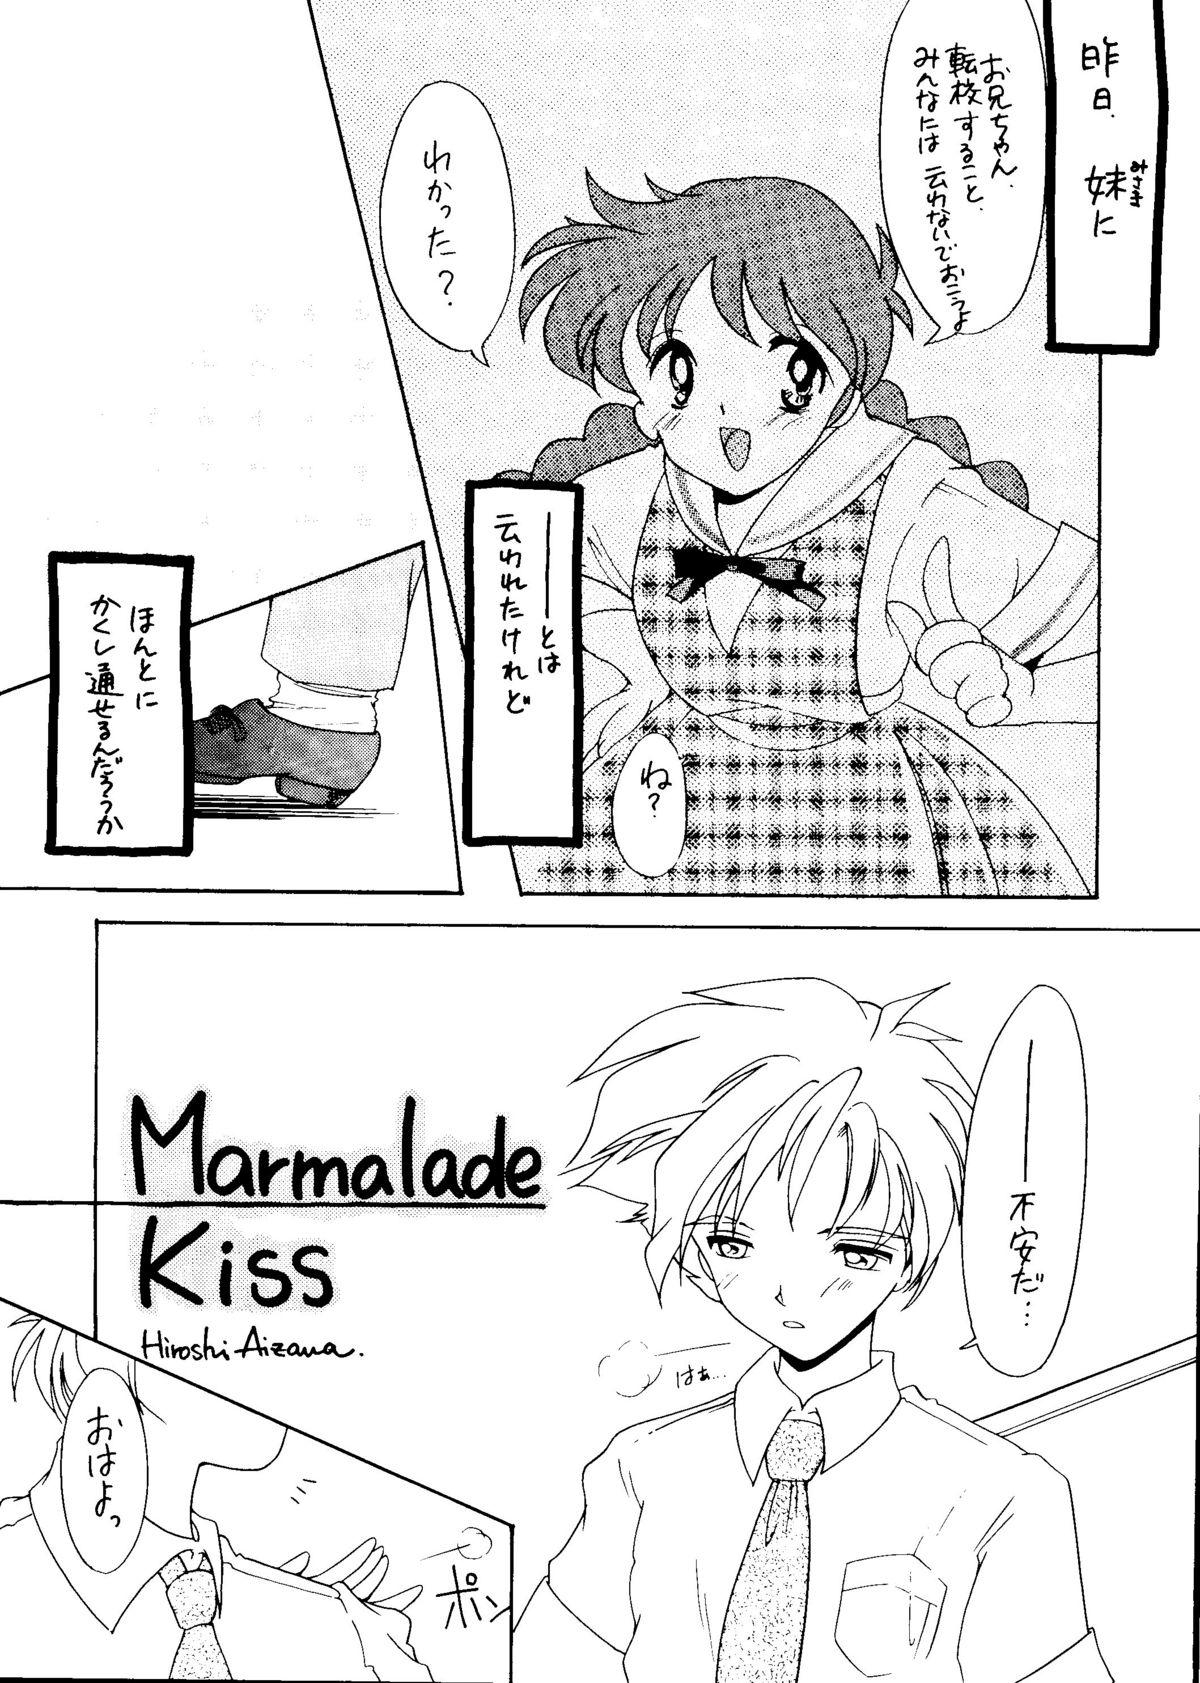 Marmalade Kiss 10